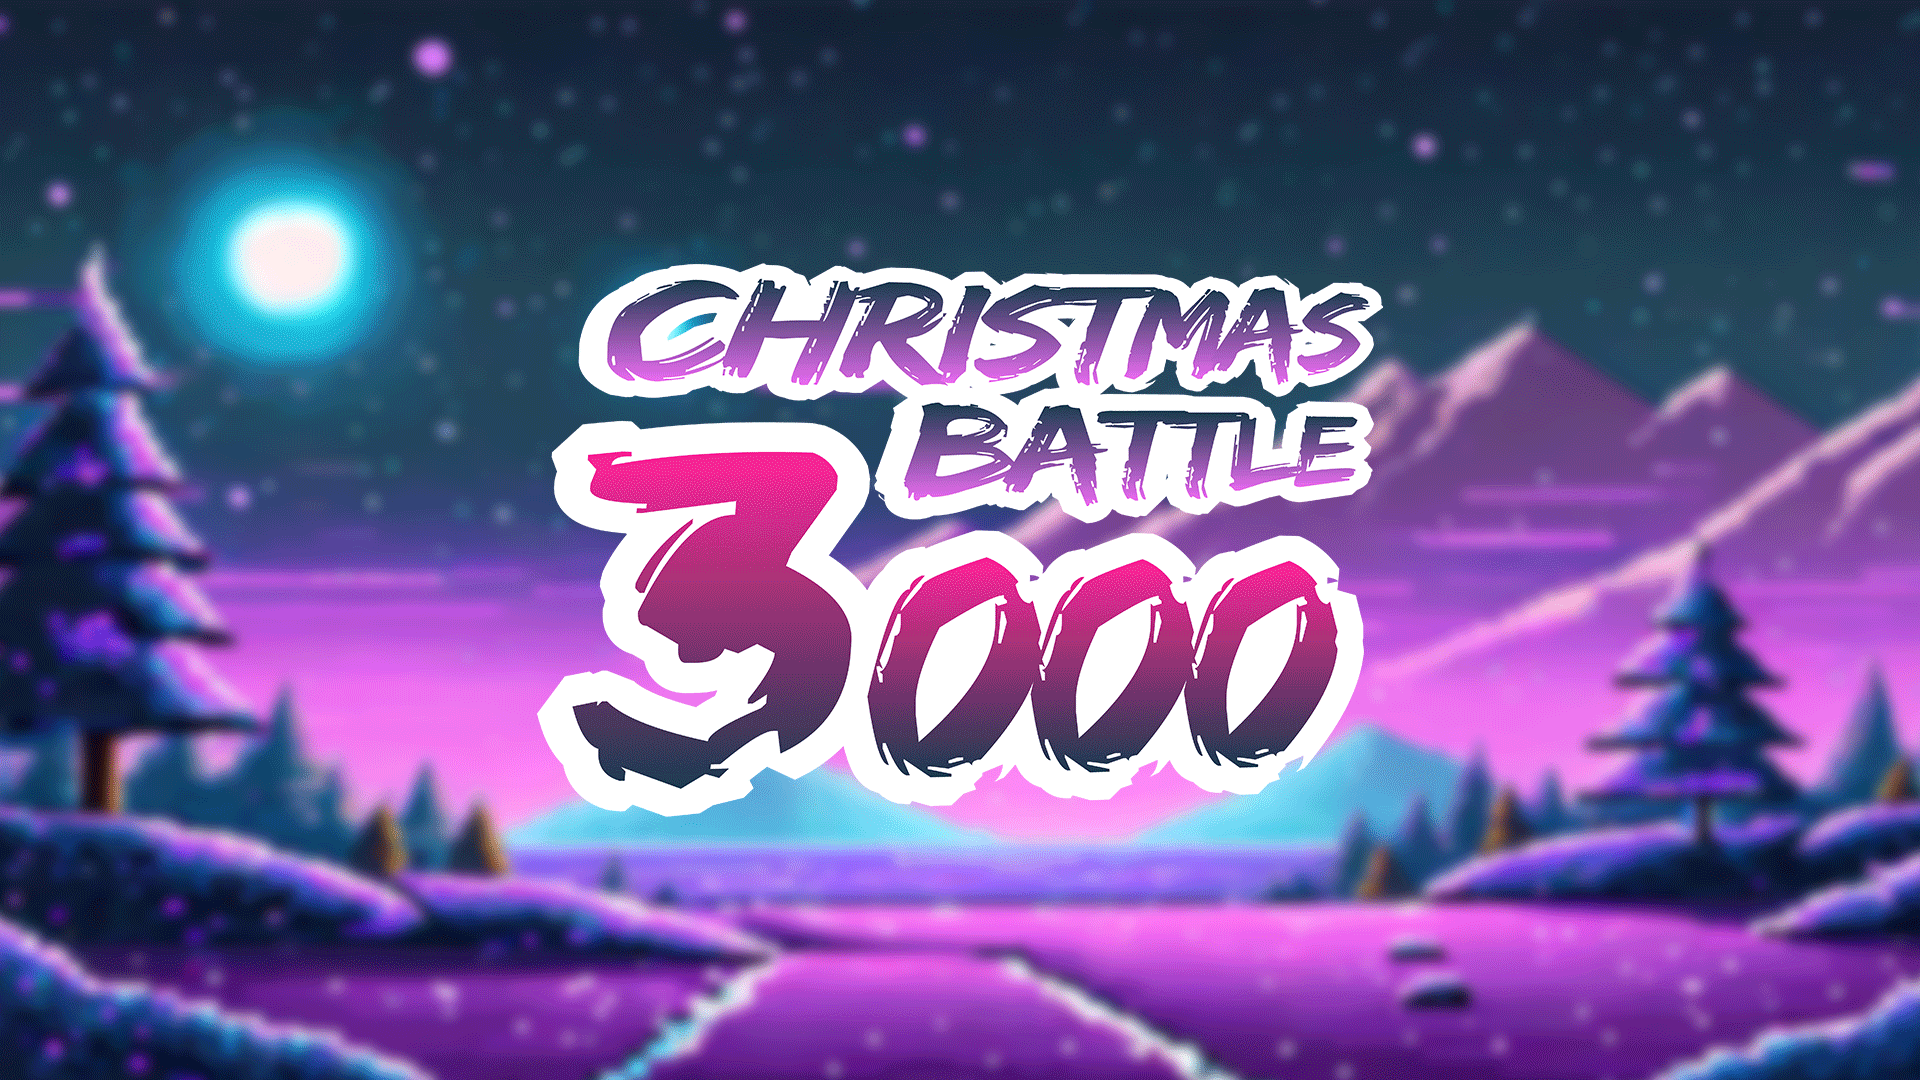 Christmas Battle 3000